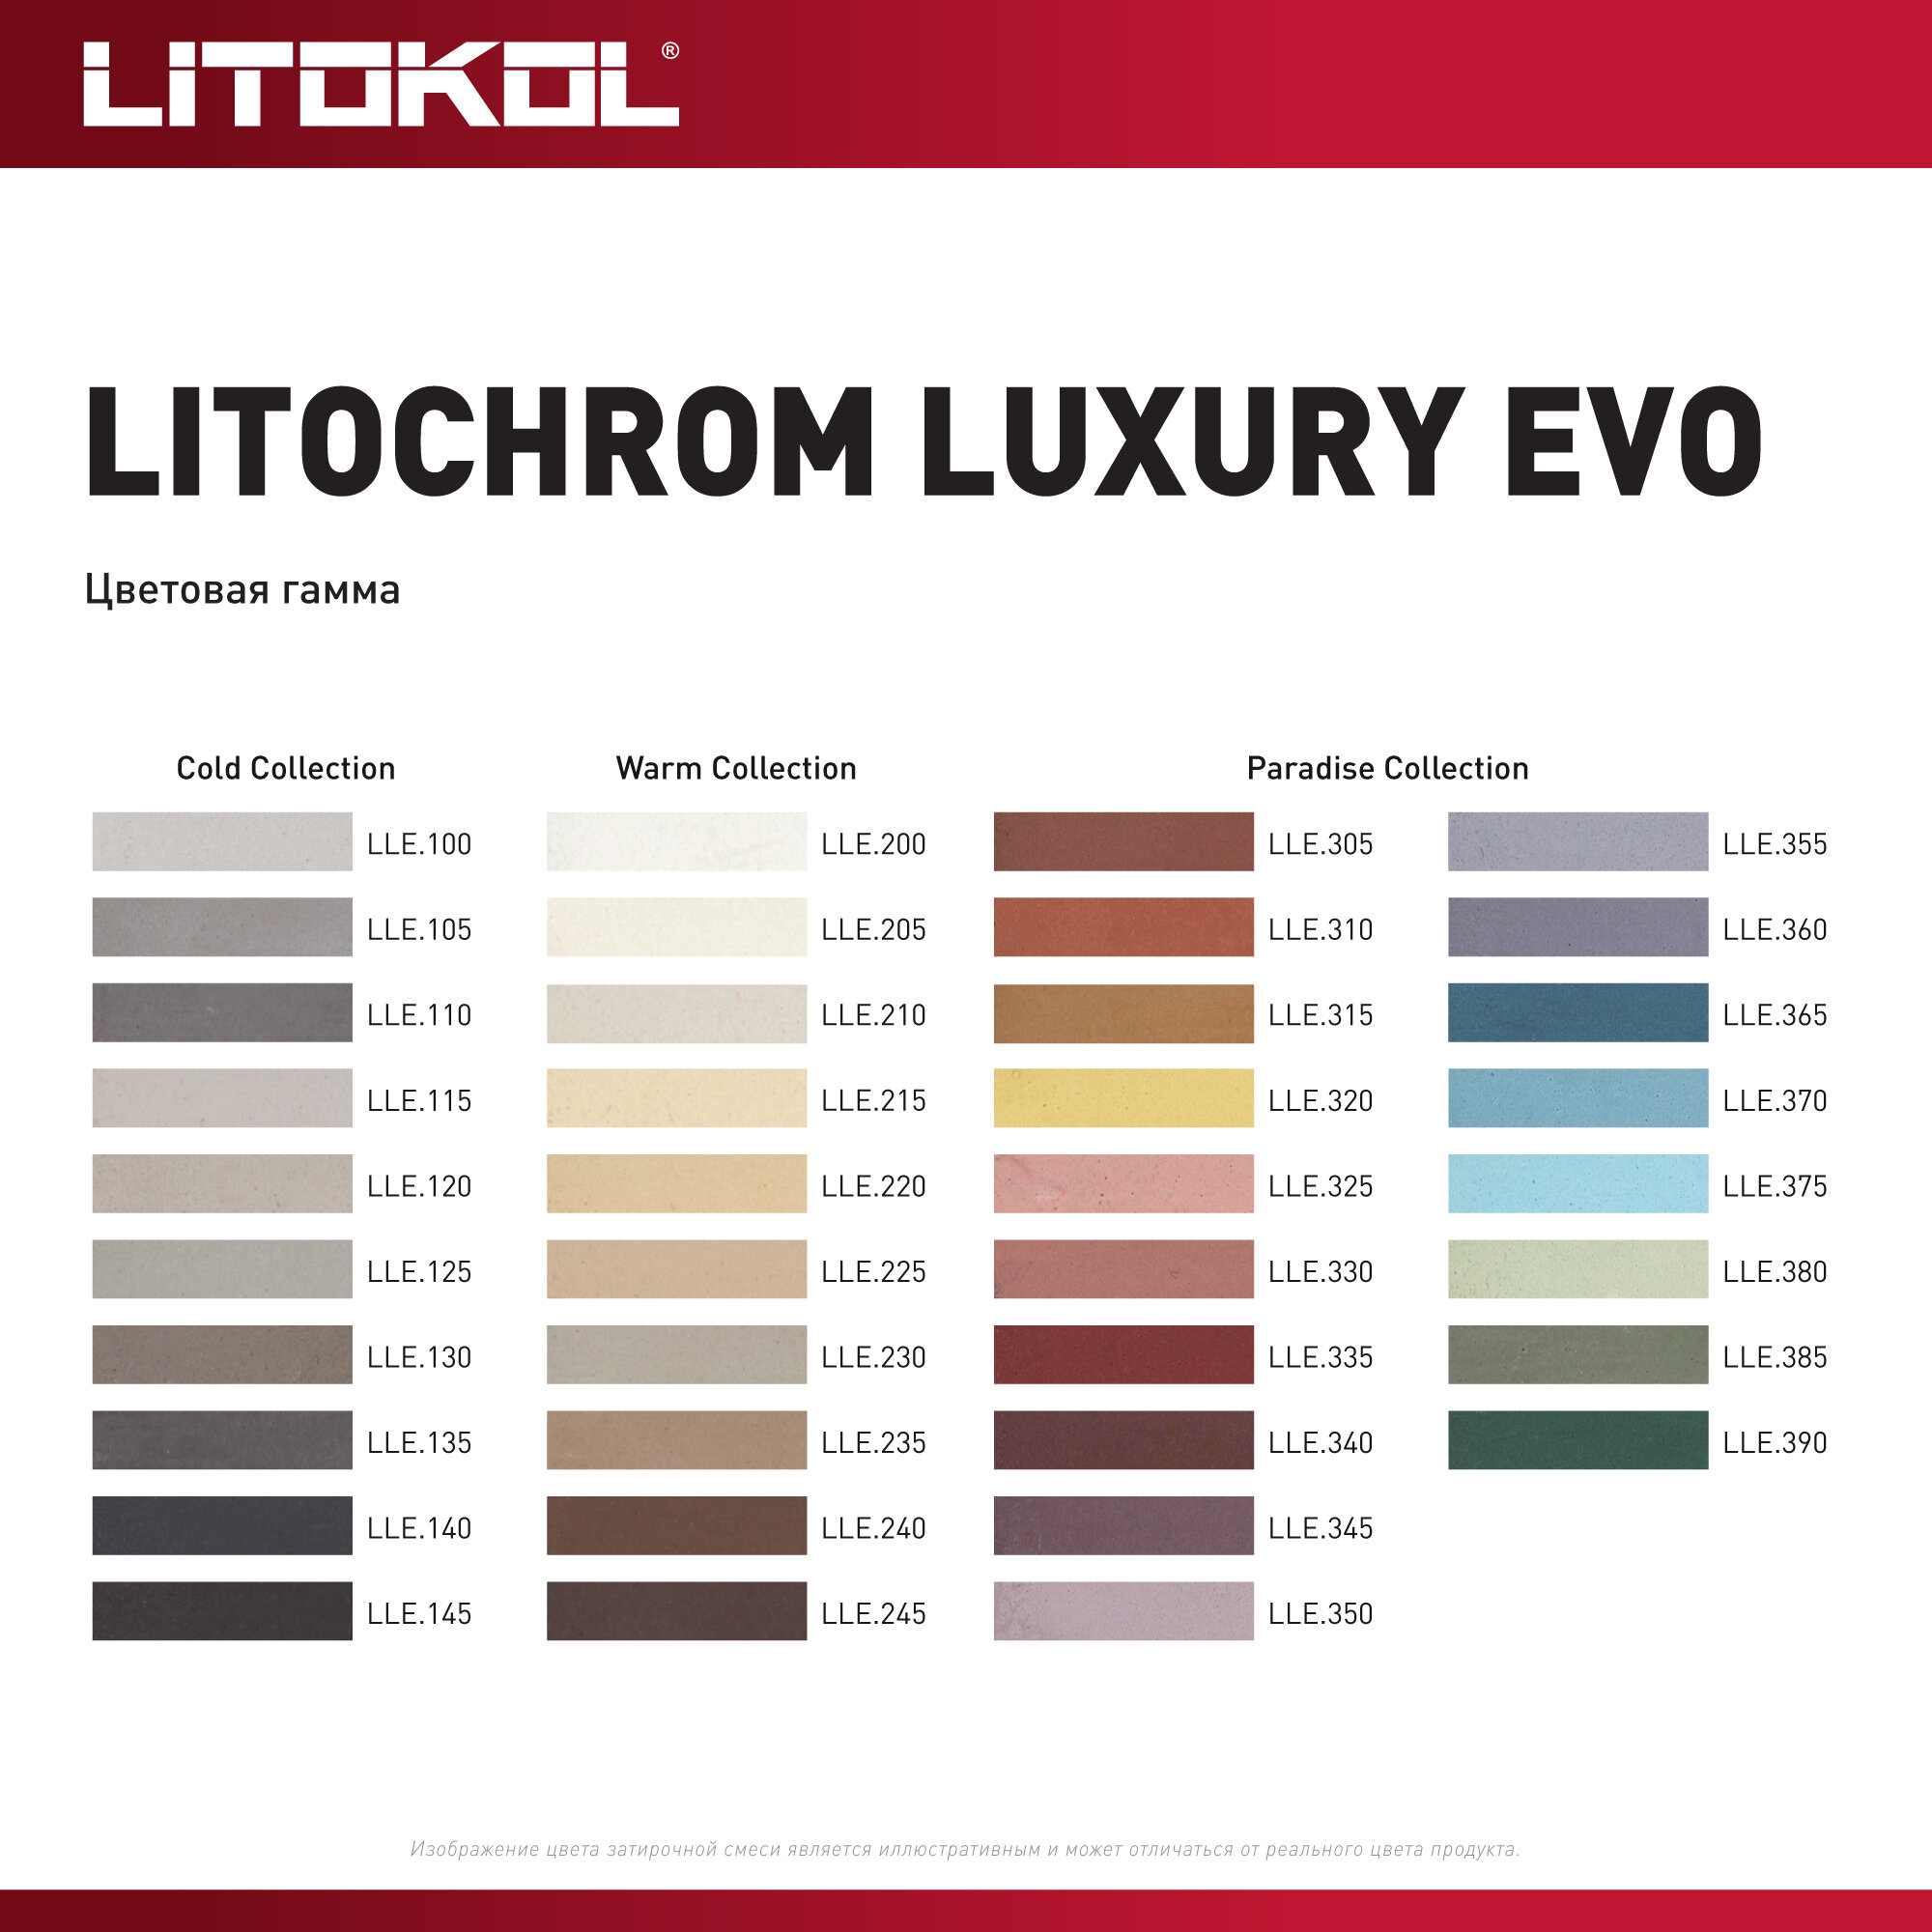 Затирка цементно-полимерная Litokol Litochrom Luxury Evo цвет LLE 210 карамель 2кг - фото №7